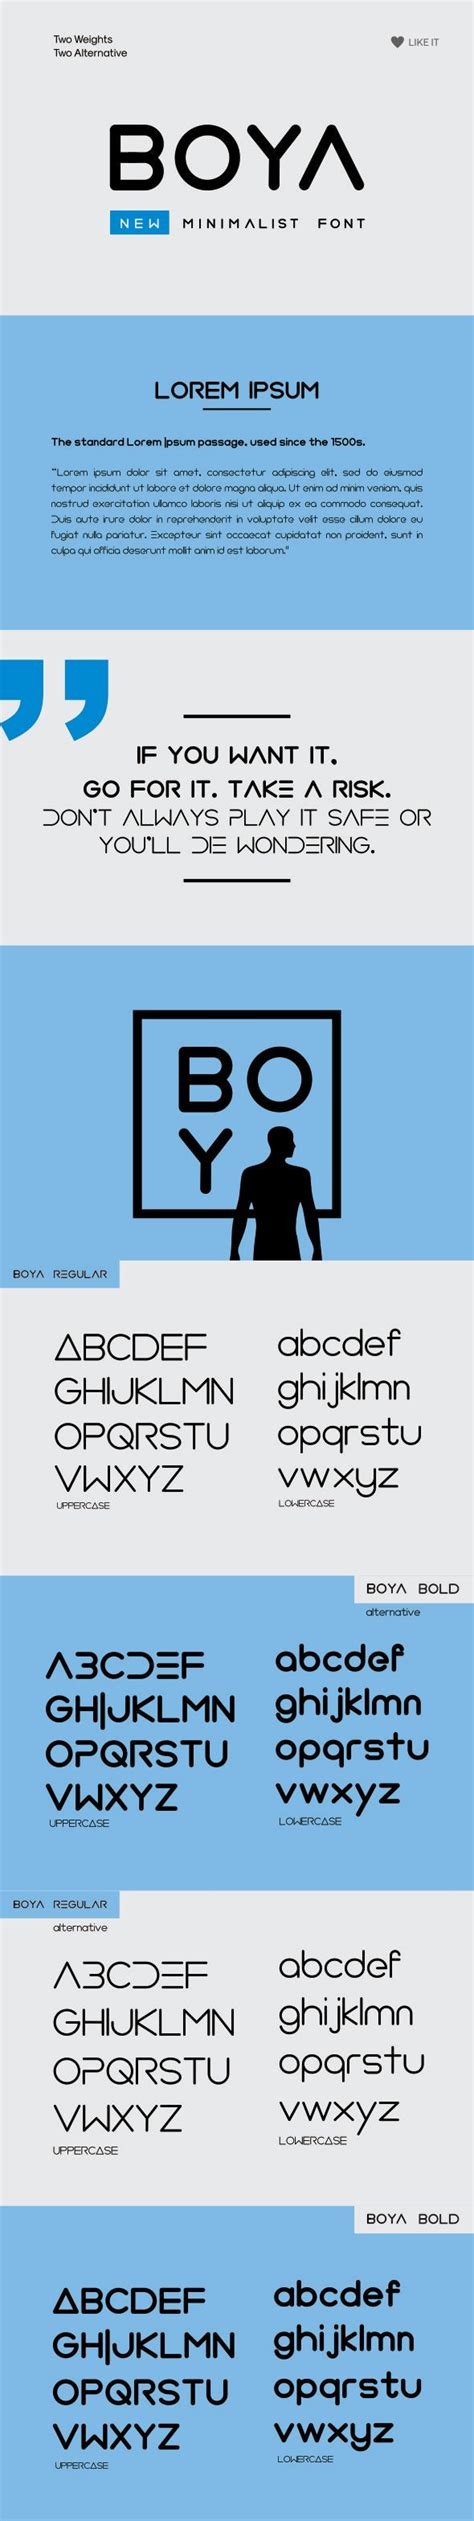 Boya Rounded Font By Bangunstudio Graphicriver